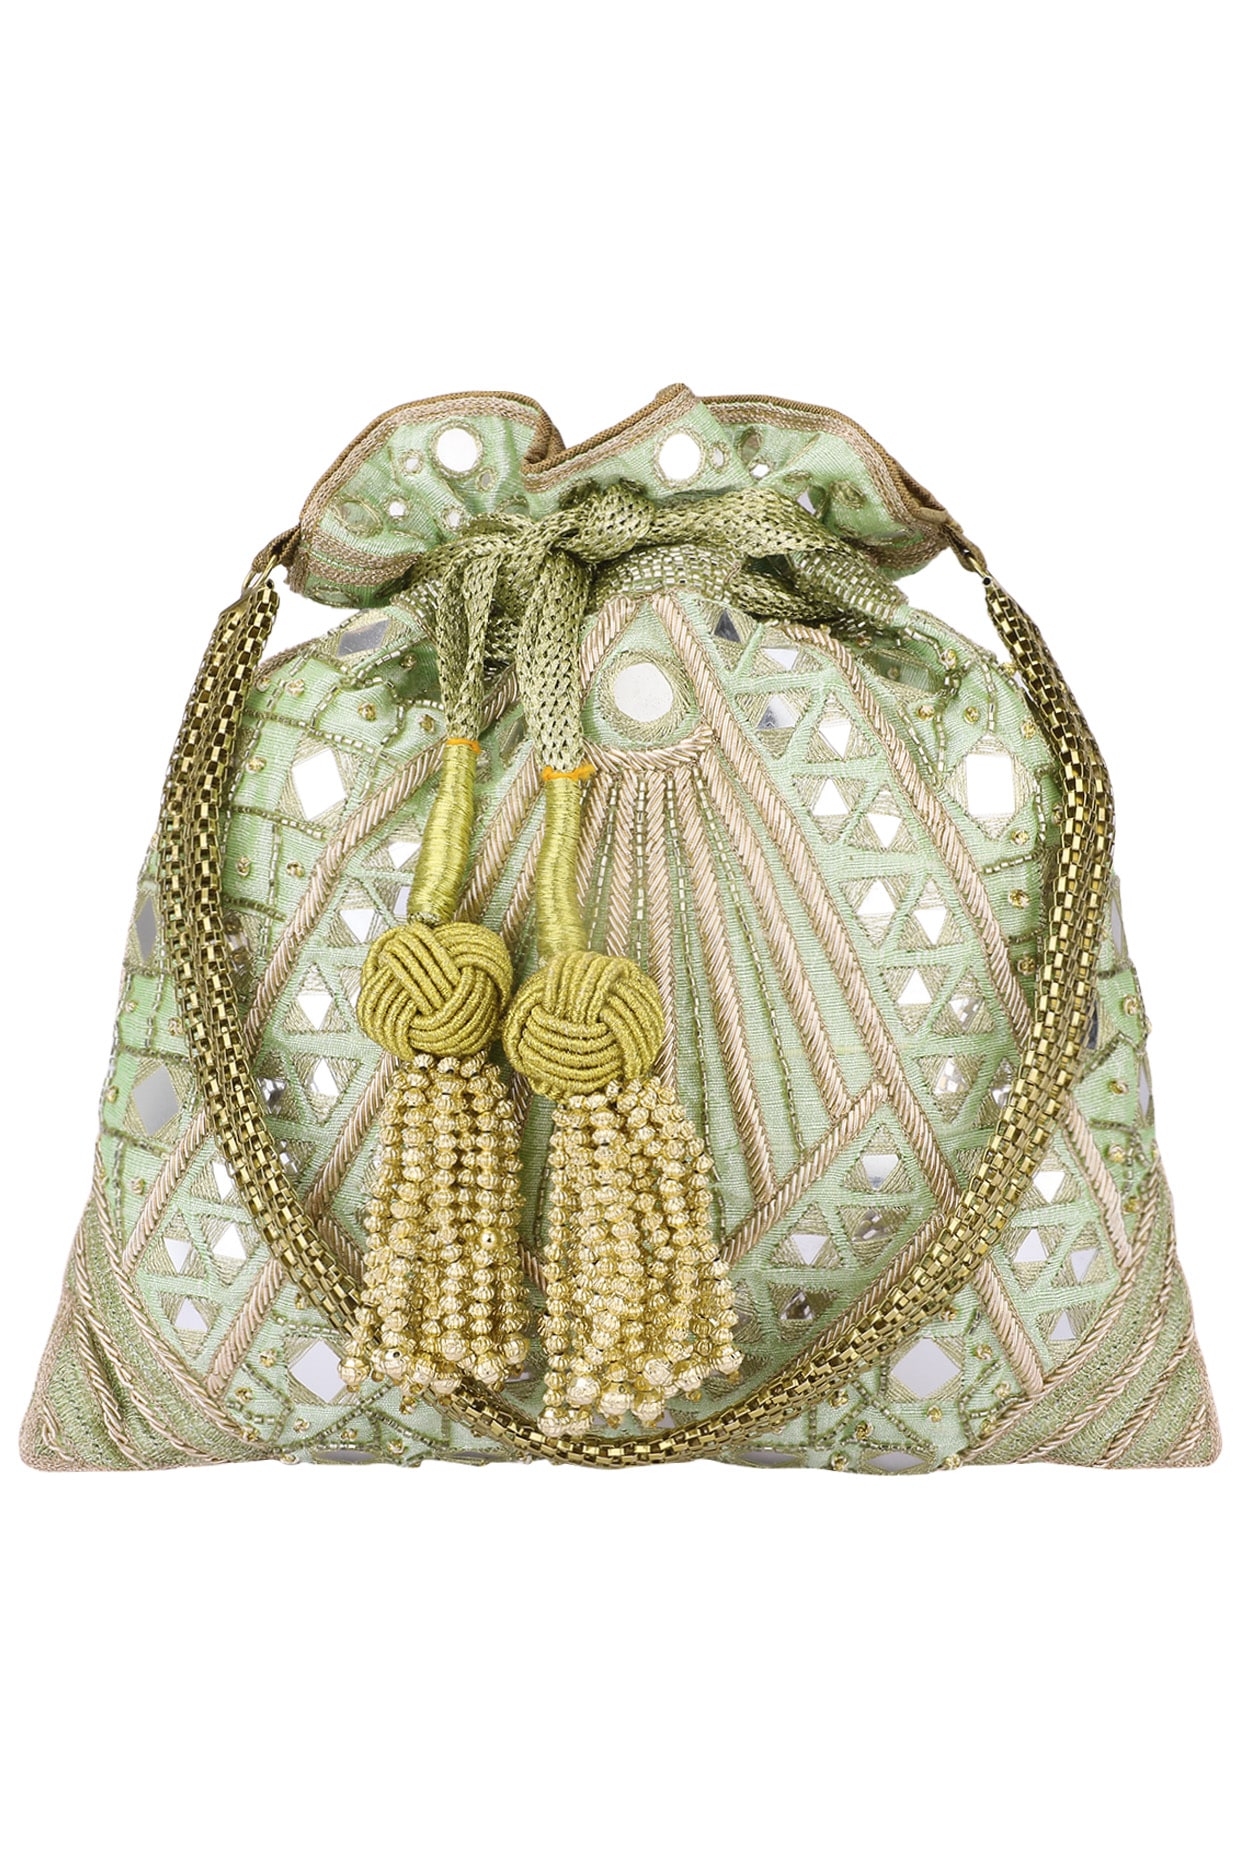 Pretty Potli Bag | Buy Potli Bags Online At Best Price In USA